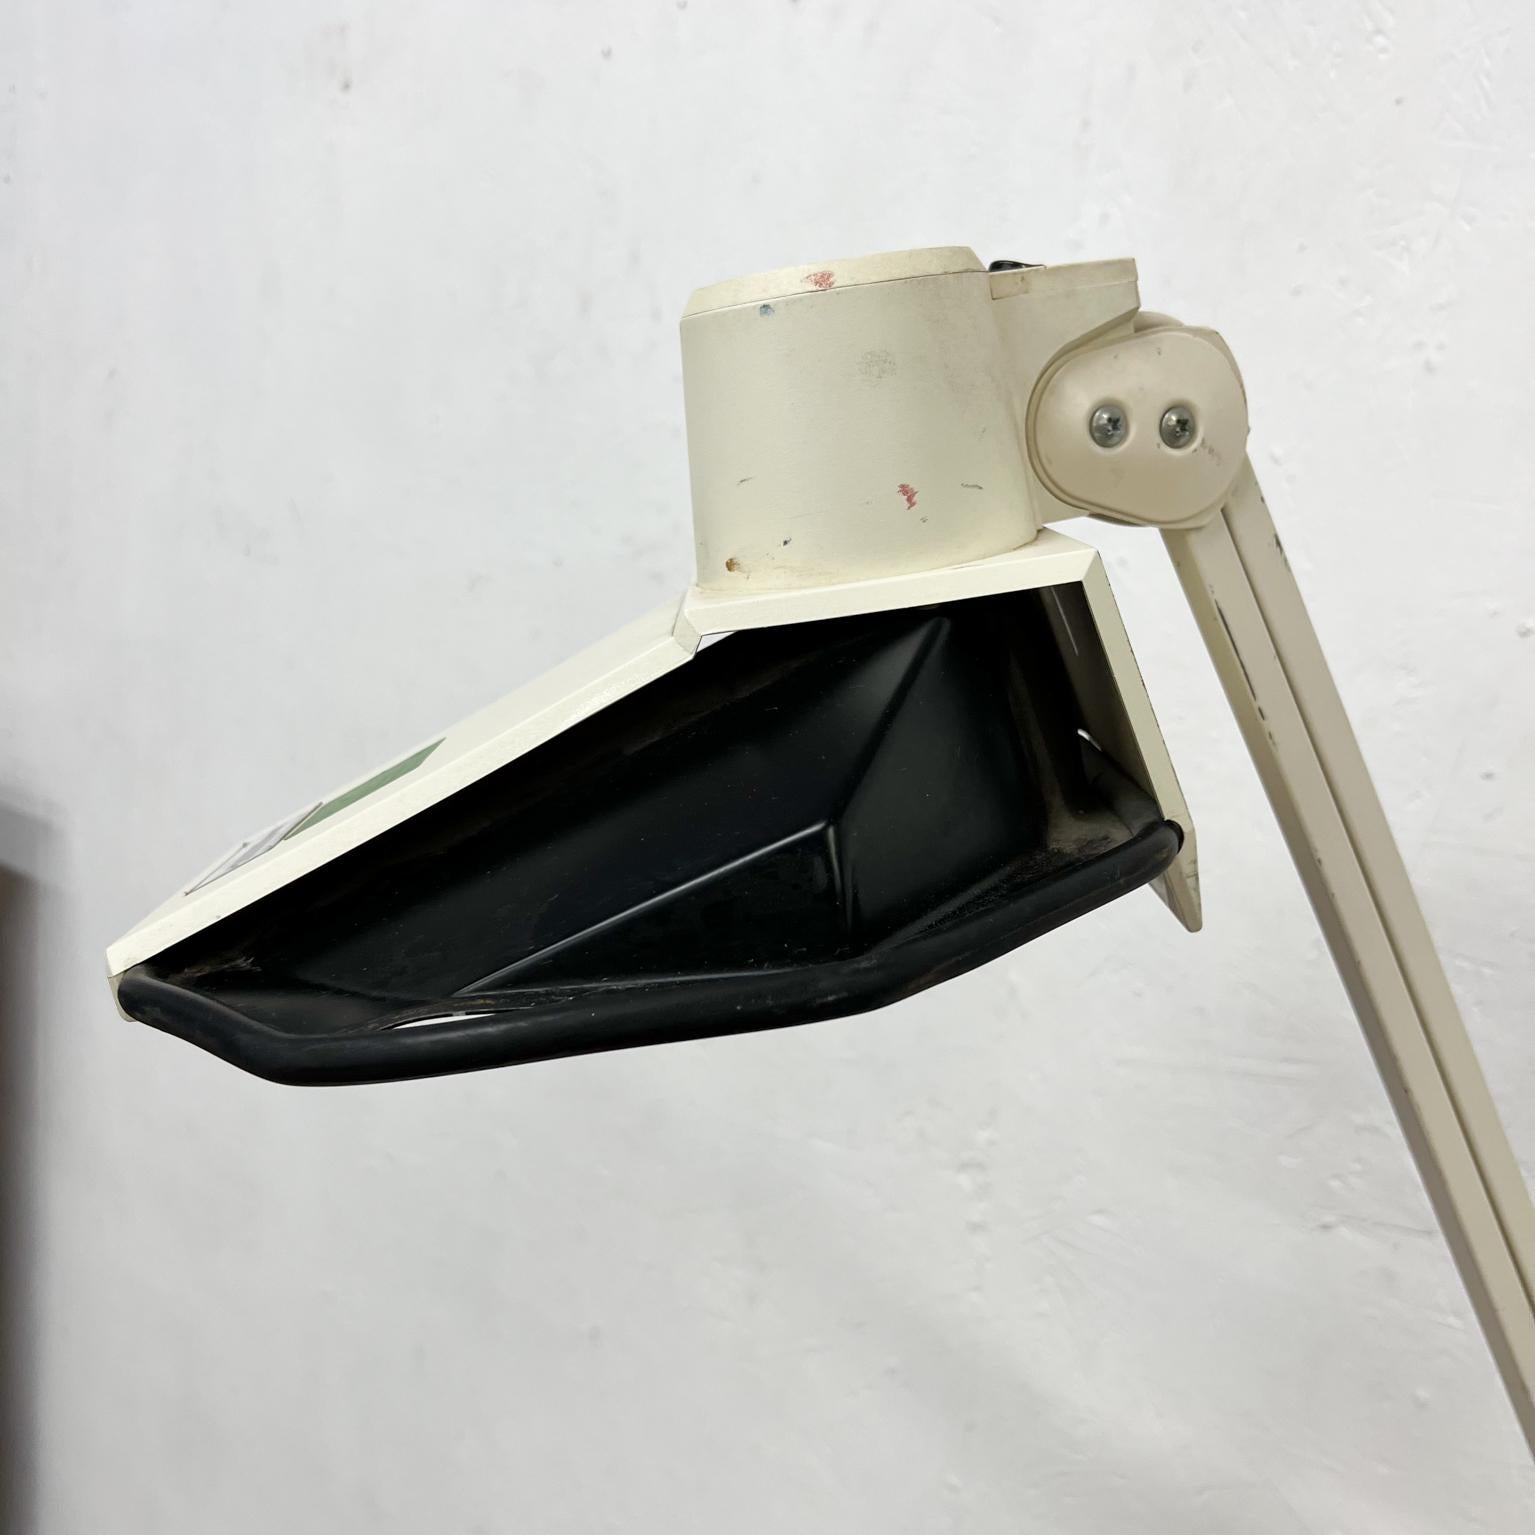 European 1970s LUXO Architect Rare Vintage Task Clamp Lamp for Desk Jac Jacobsen For Sale